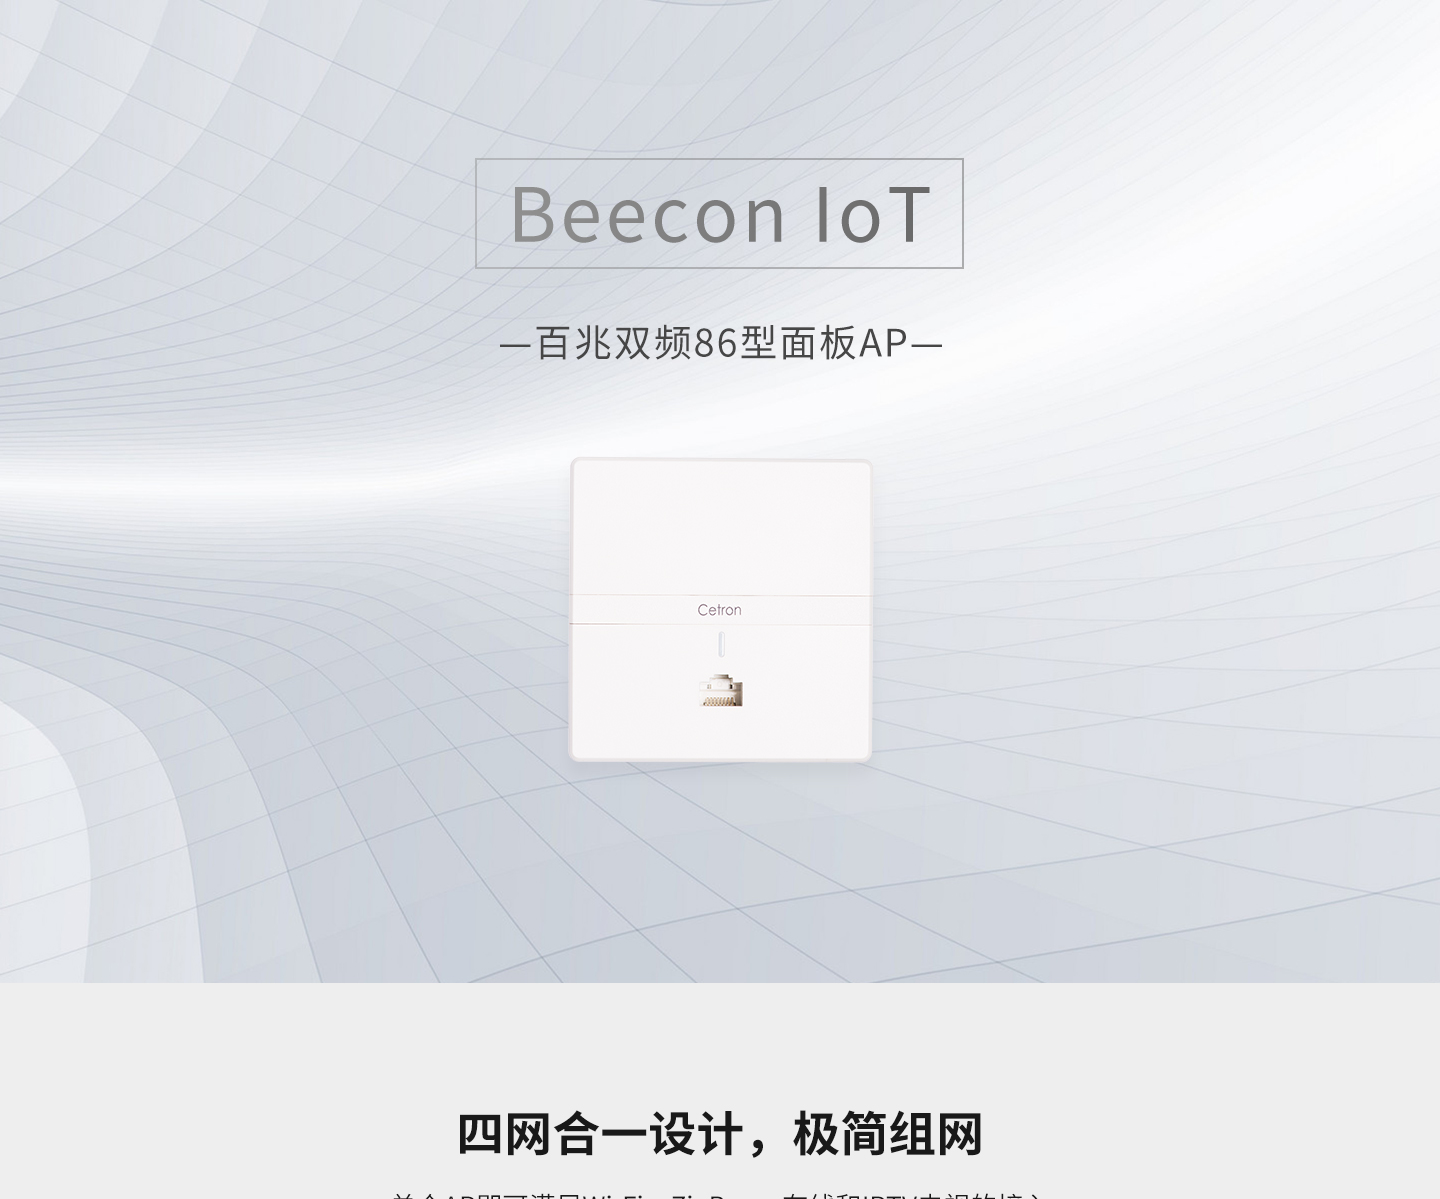 Beecon-IoT_01.jpg